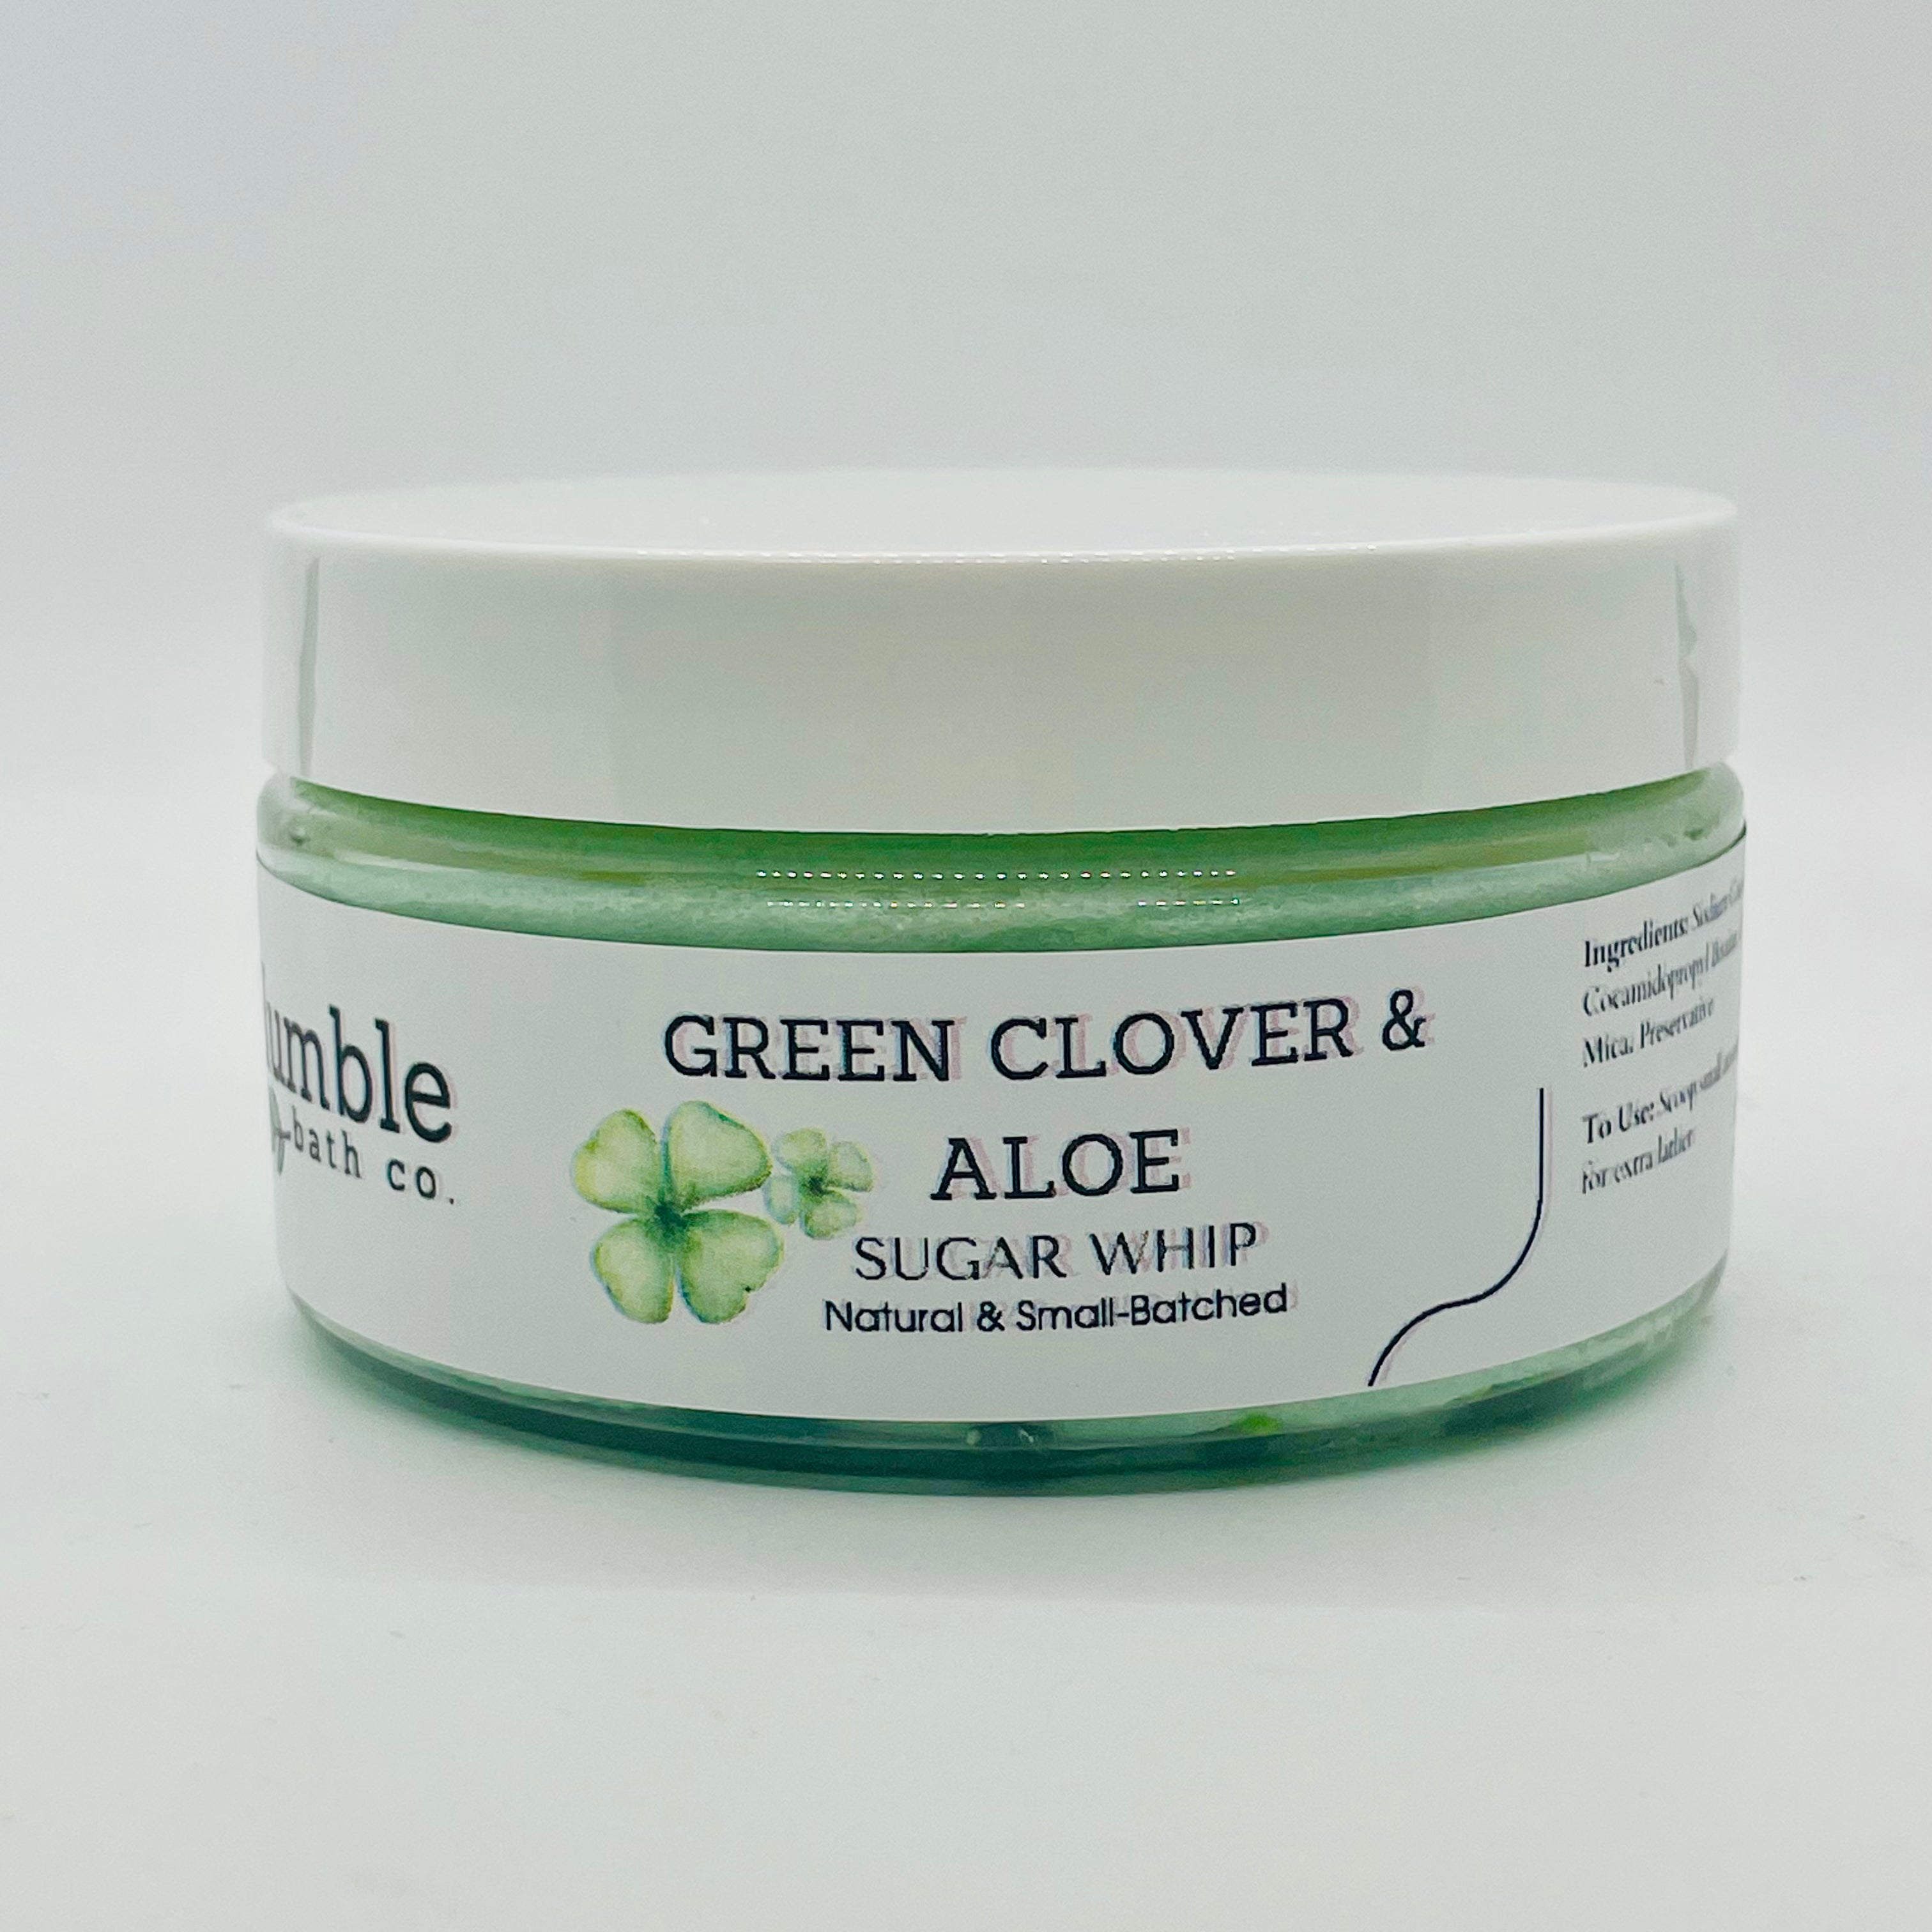 Green Clover & Aloe Sugar Whip